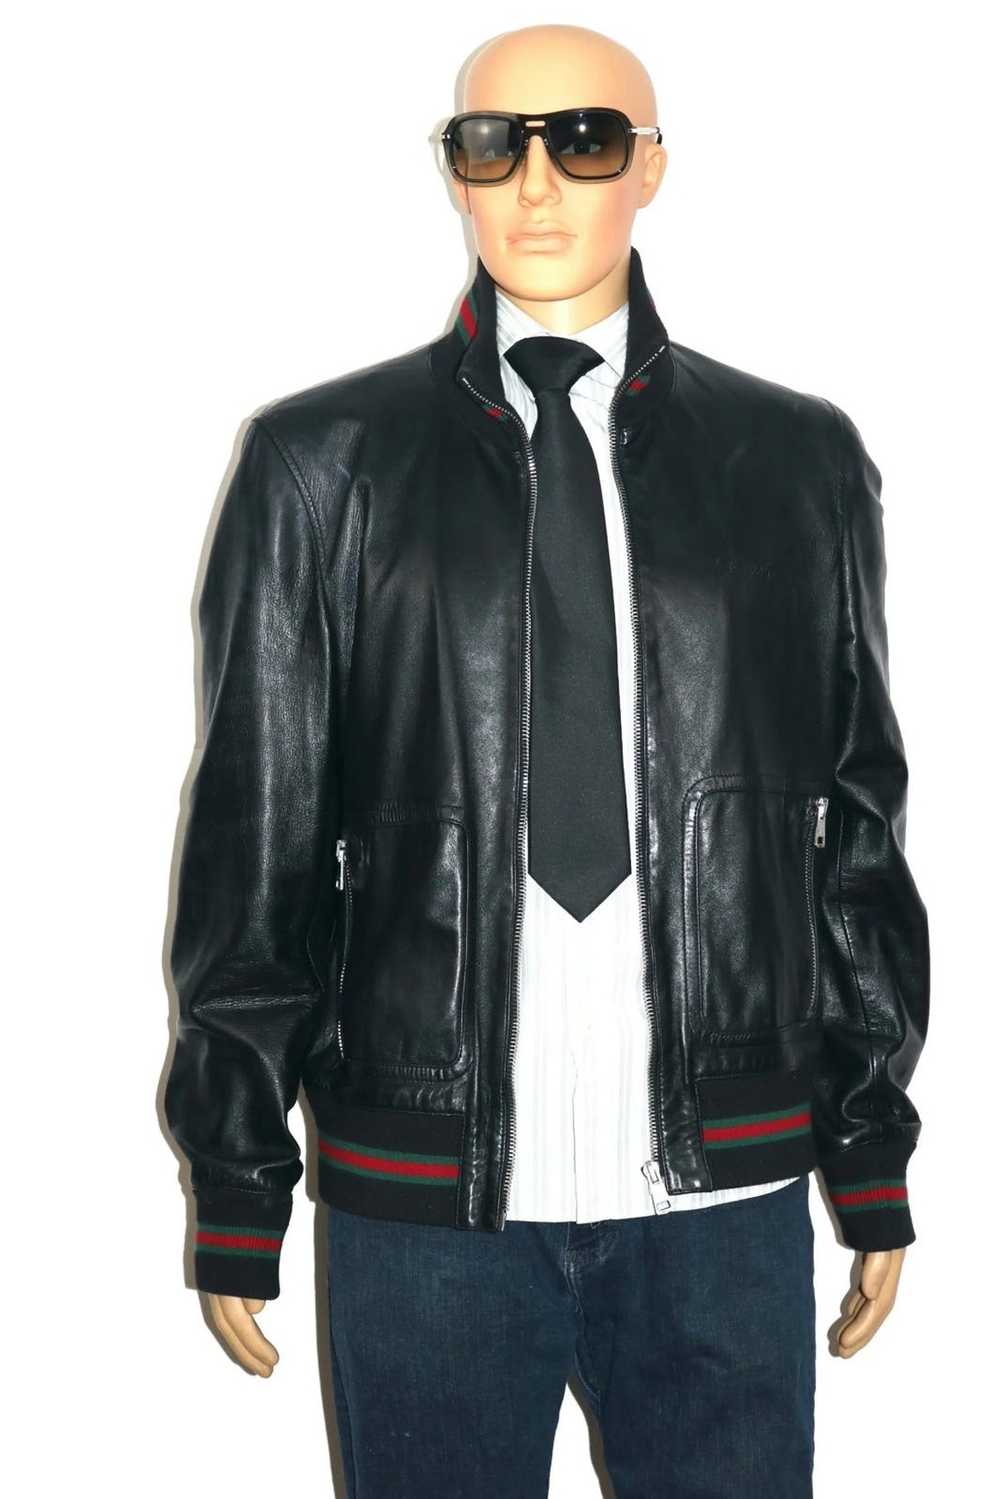 Gucci Gucci Signature Leather Jacket Vintage - image 6